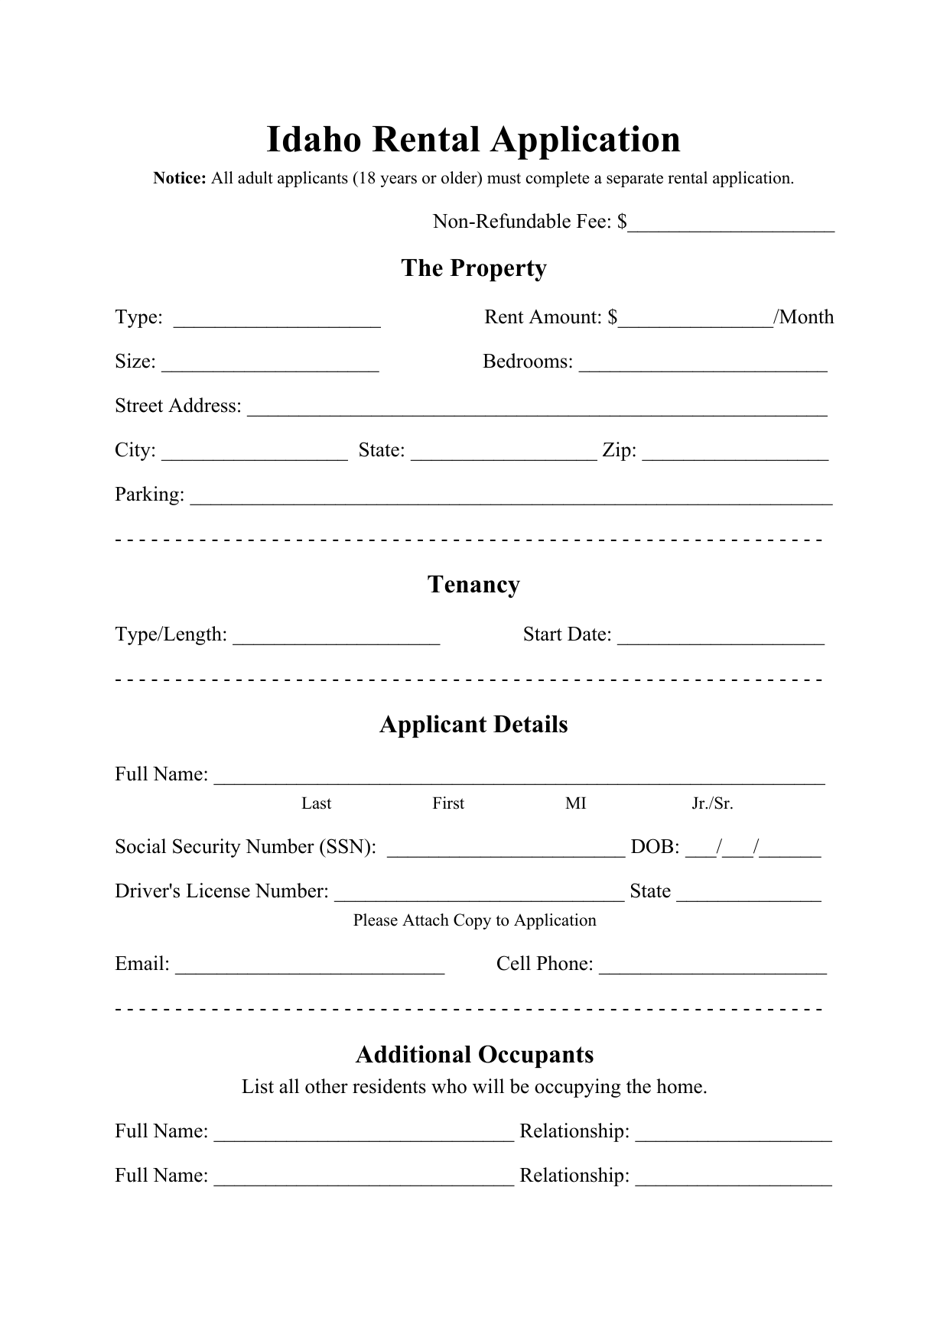 Rental Application Form - Idaho, Page 1